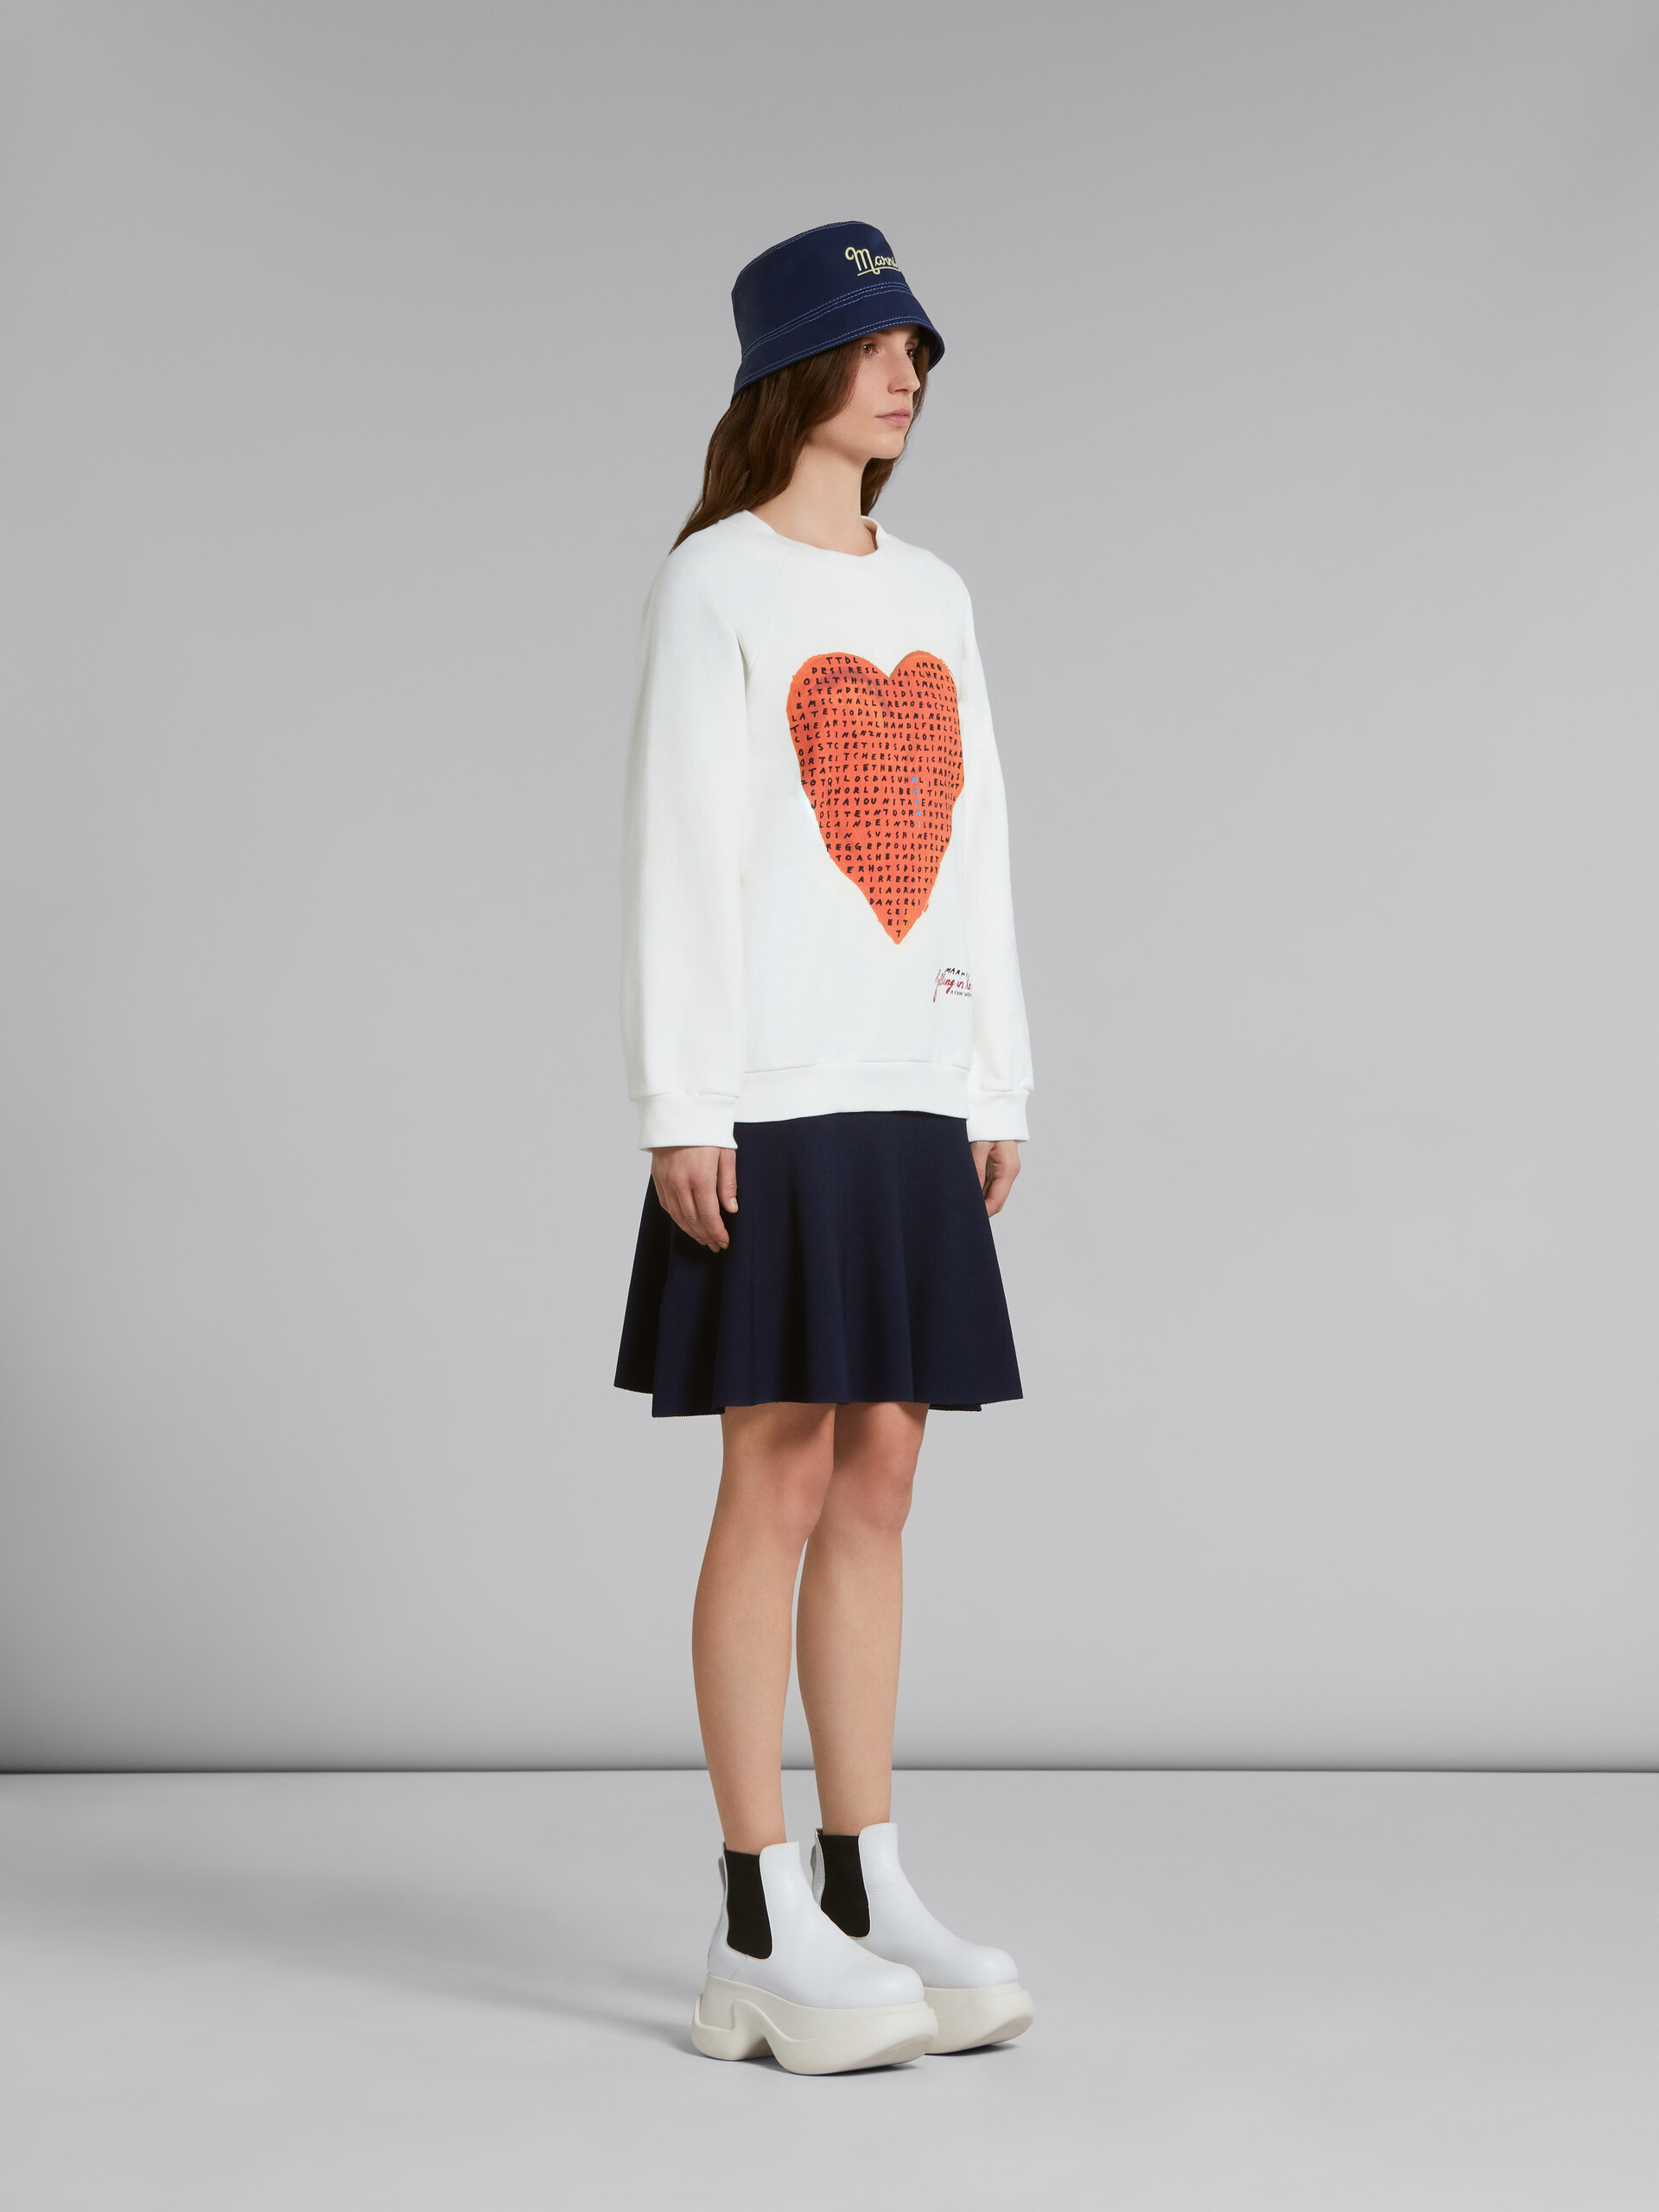 White sweatshirt with wordsearch heart print